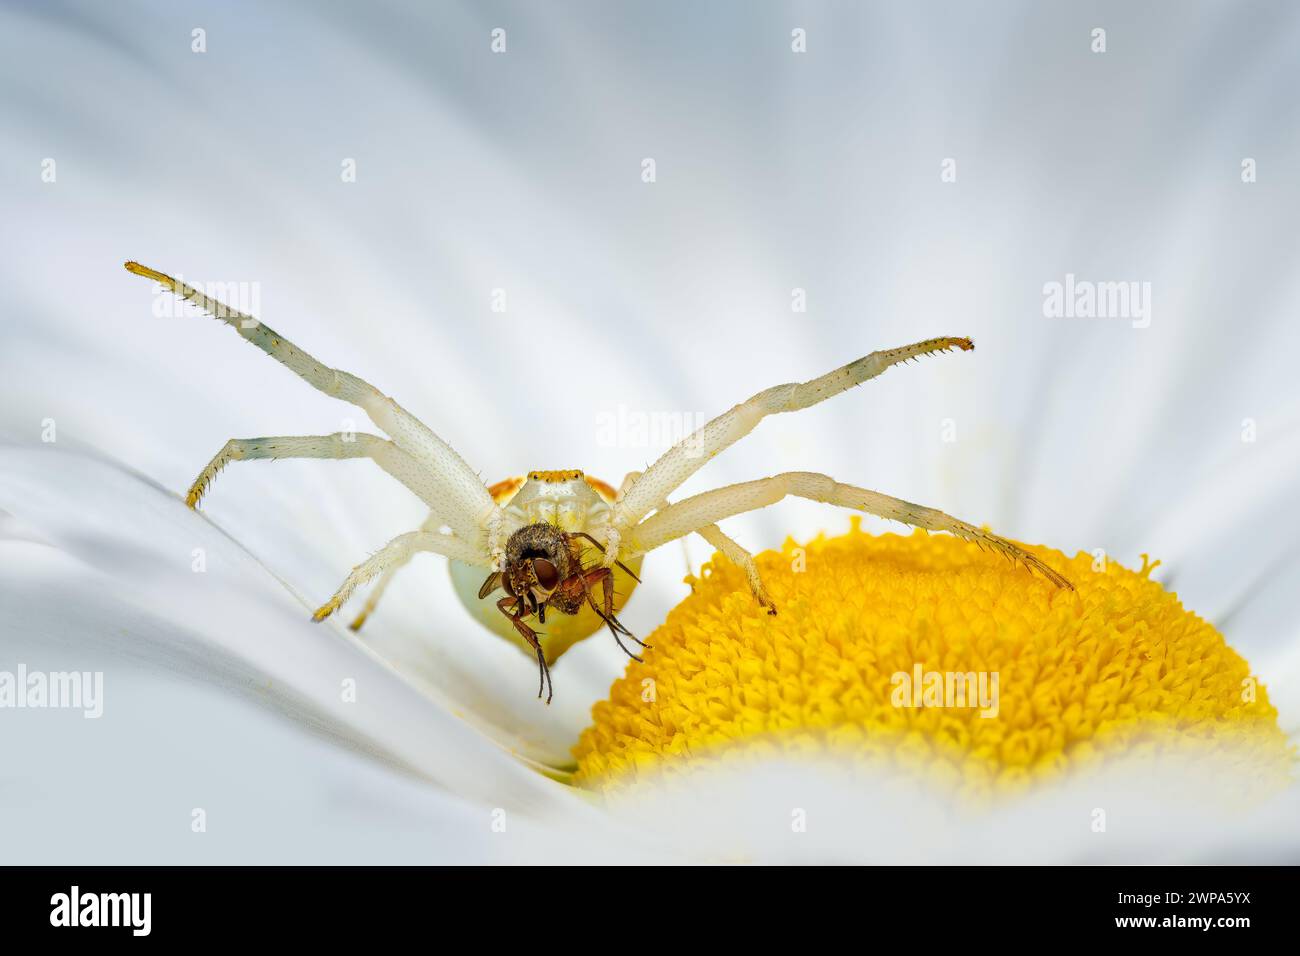 Crab spider (Misumena vatia) with victim (fly) on a daisy Stock Photo